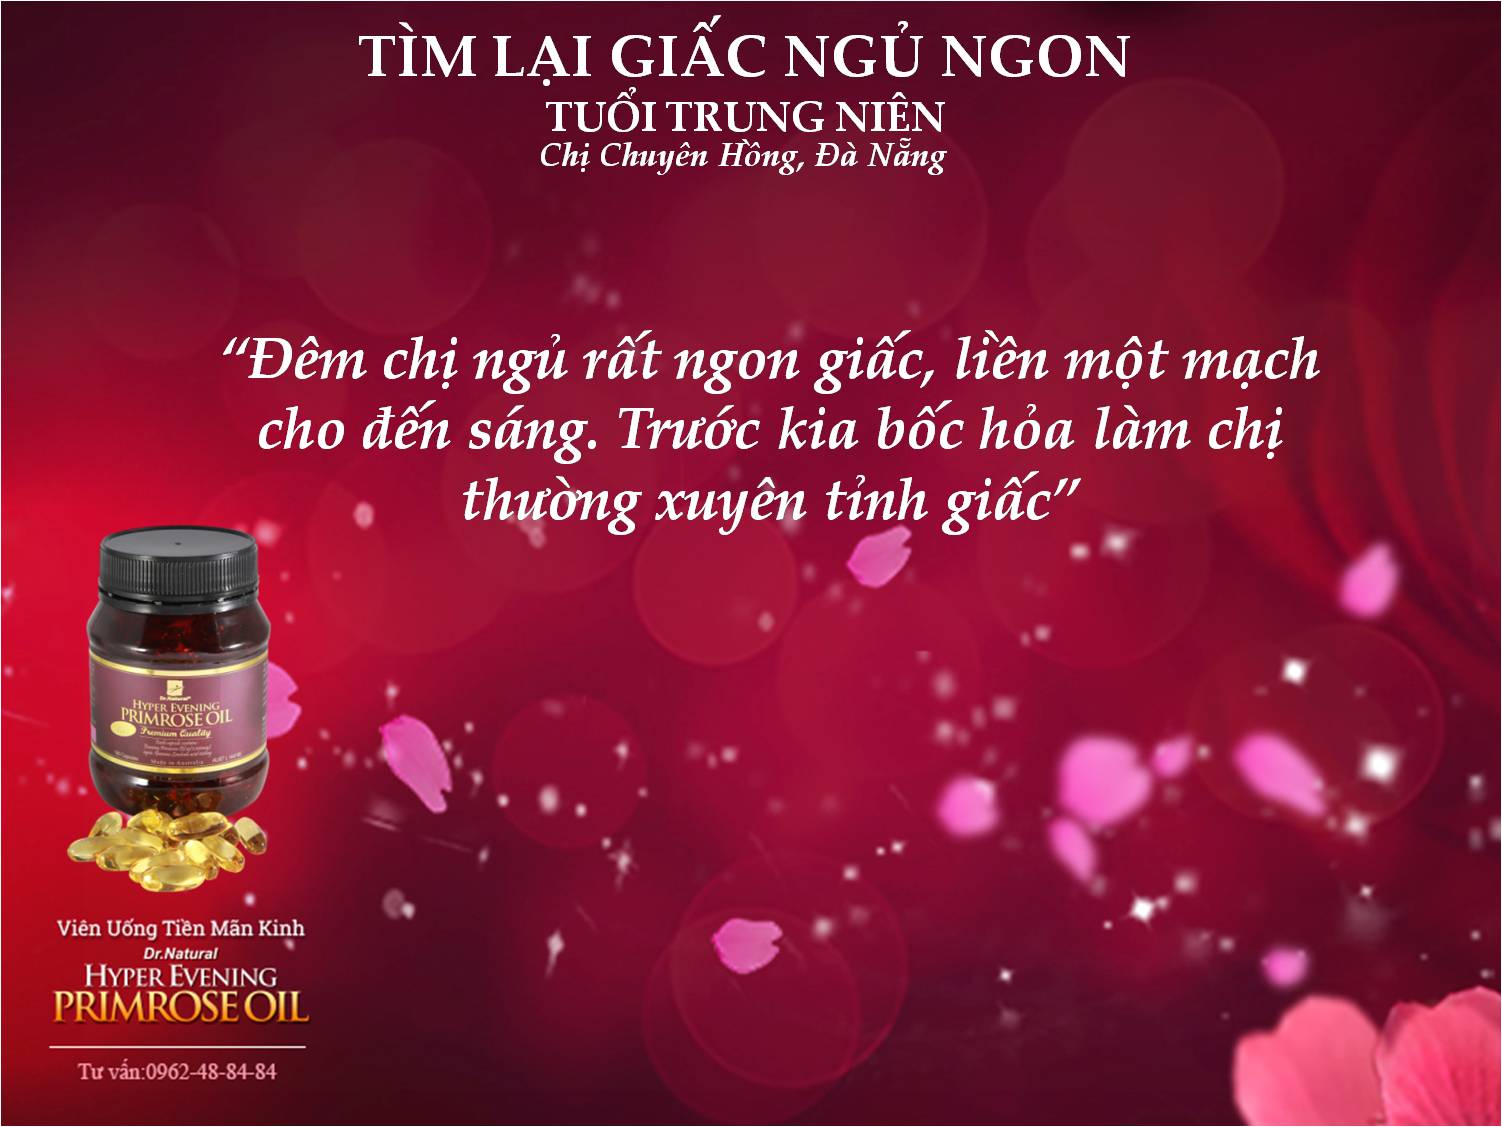 Vien Uong Tien Man Kinh Dr. Natural Hyper Evening Primrose Oil